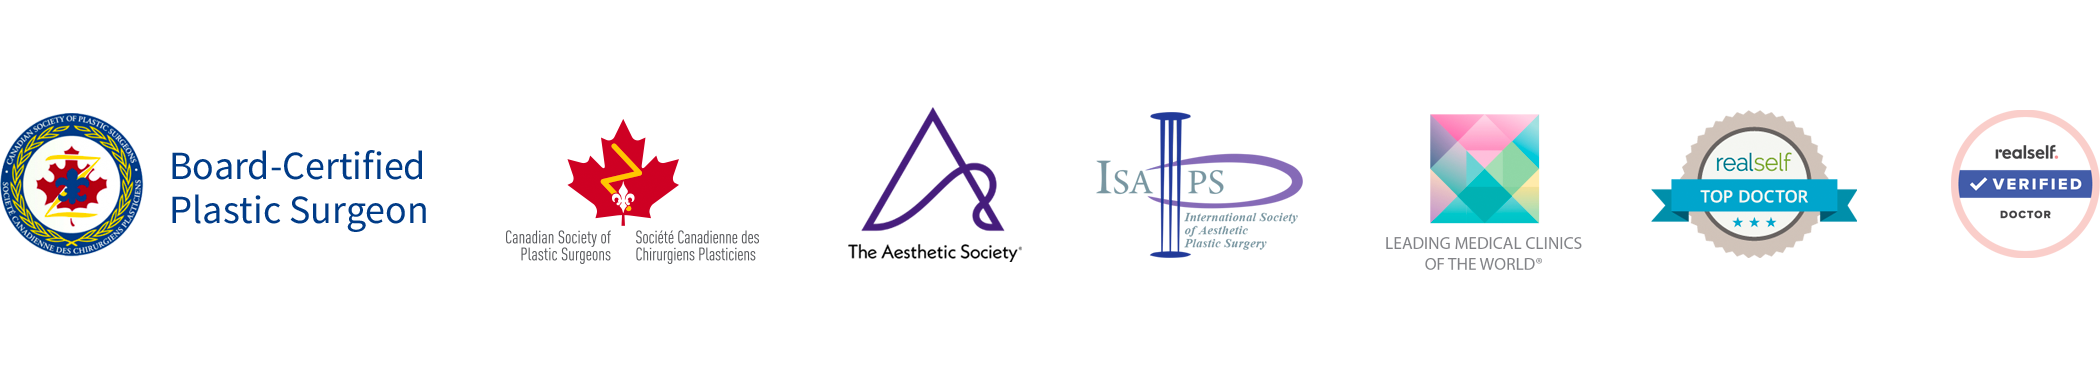 Board-Certified Toronto Plastic Surgeon, Member of CSPS,  ASAPS, ISAPS